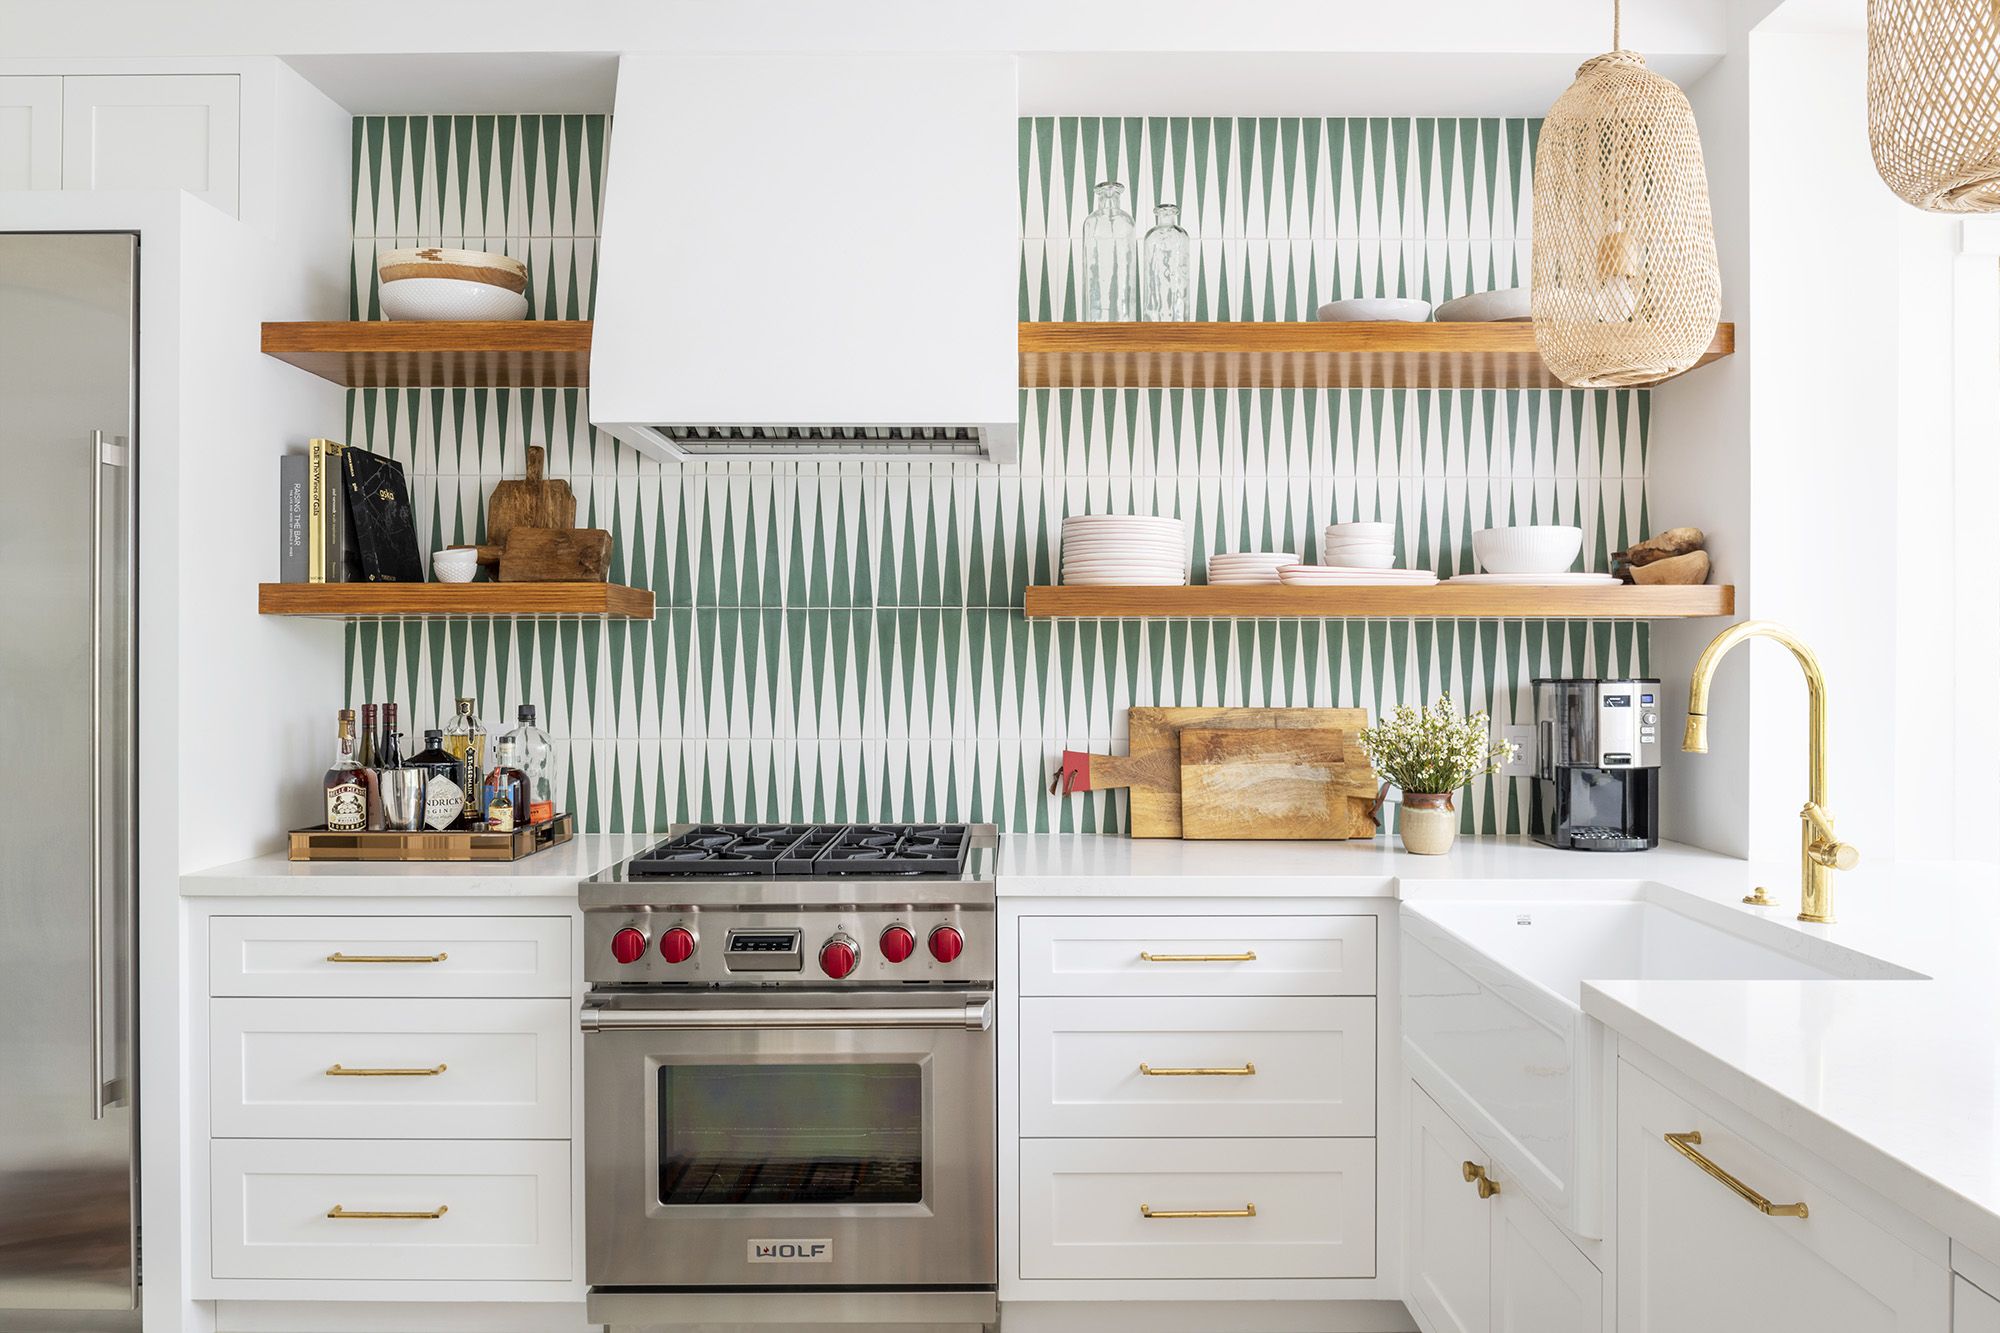 20 Best Small Kitchen Design Ideas   Tiny Kitchen Decorating